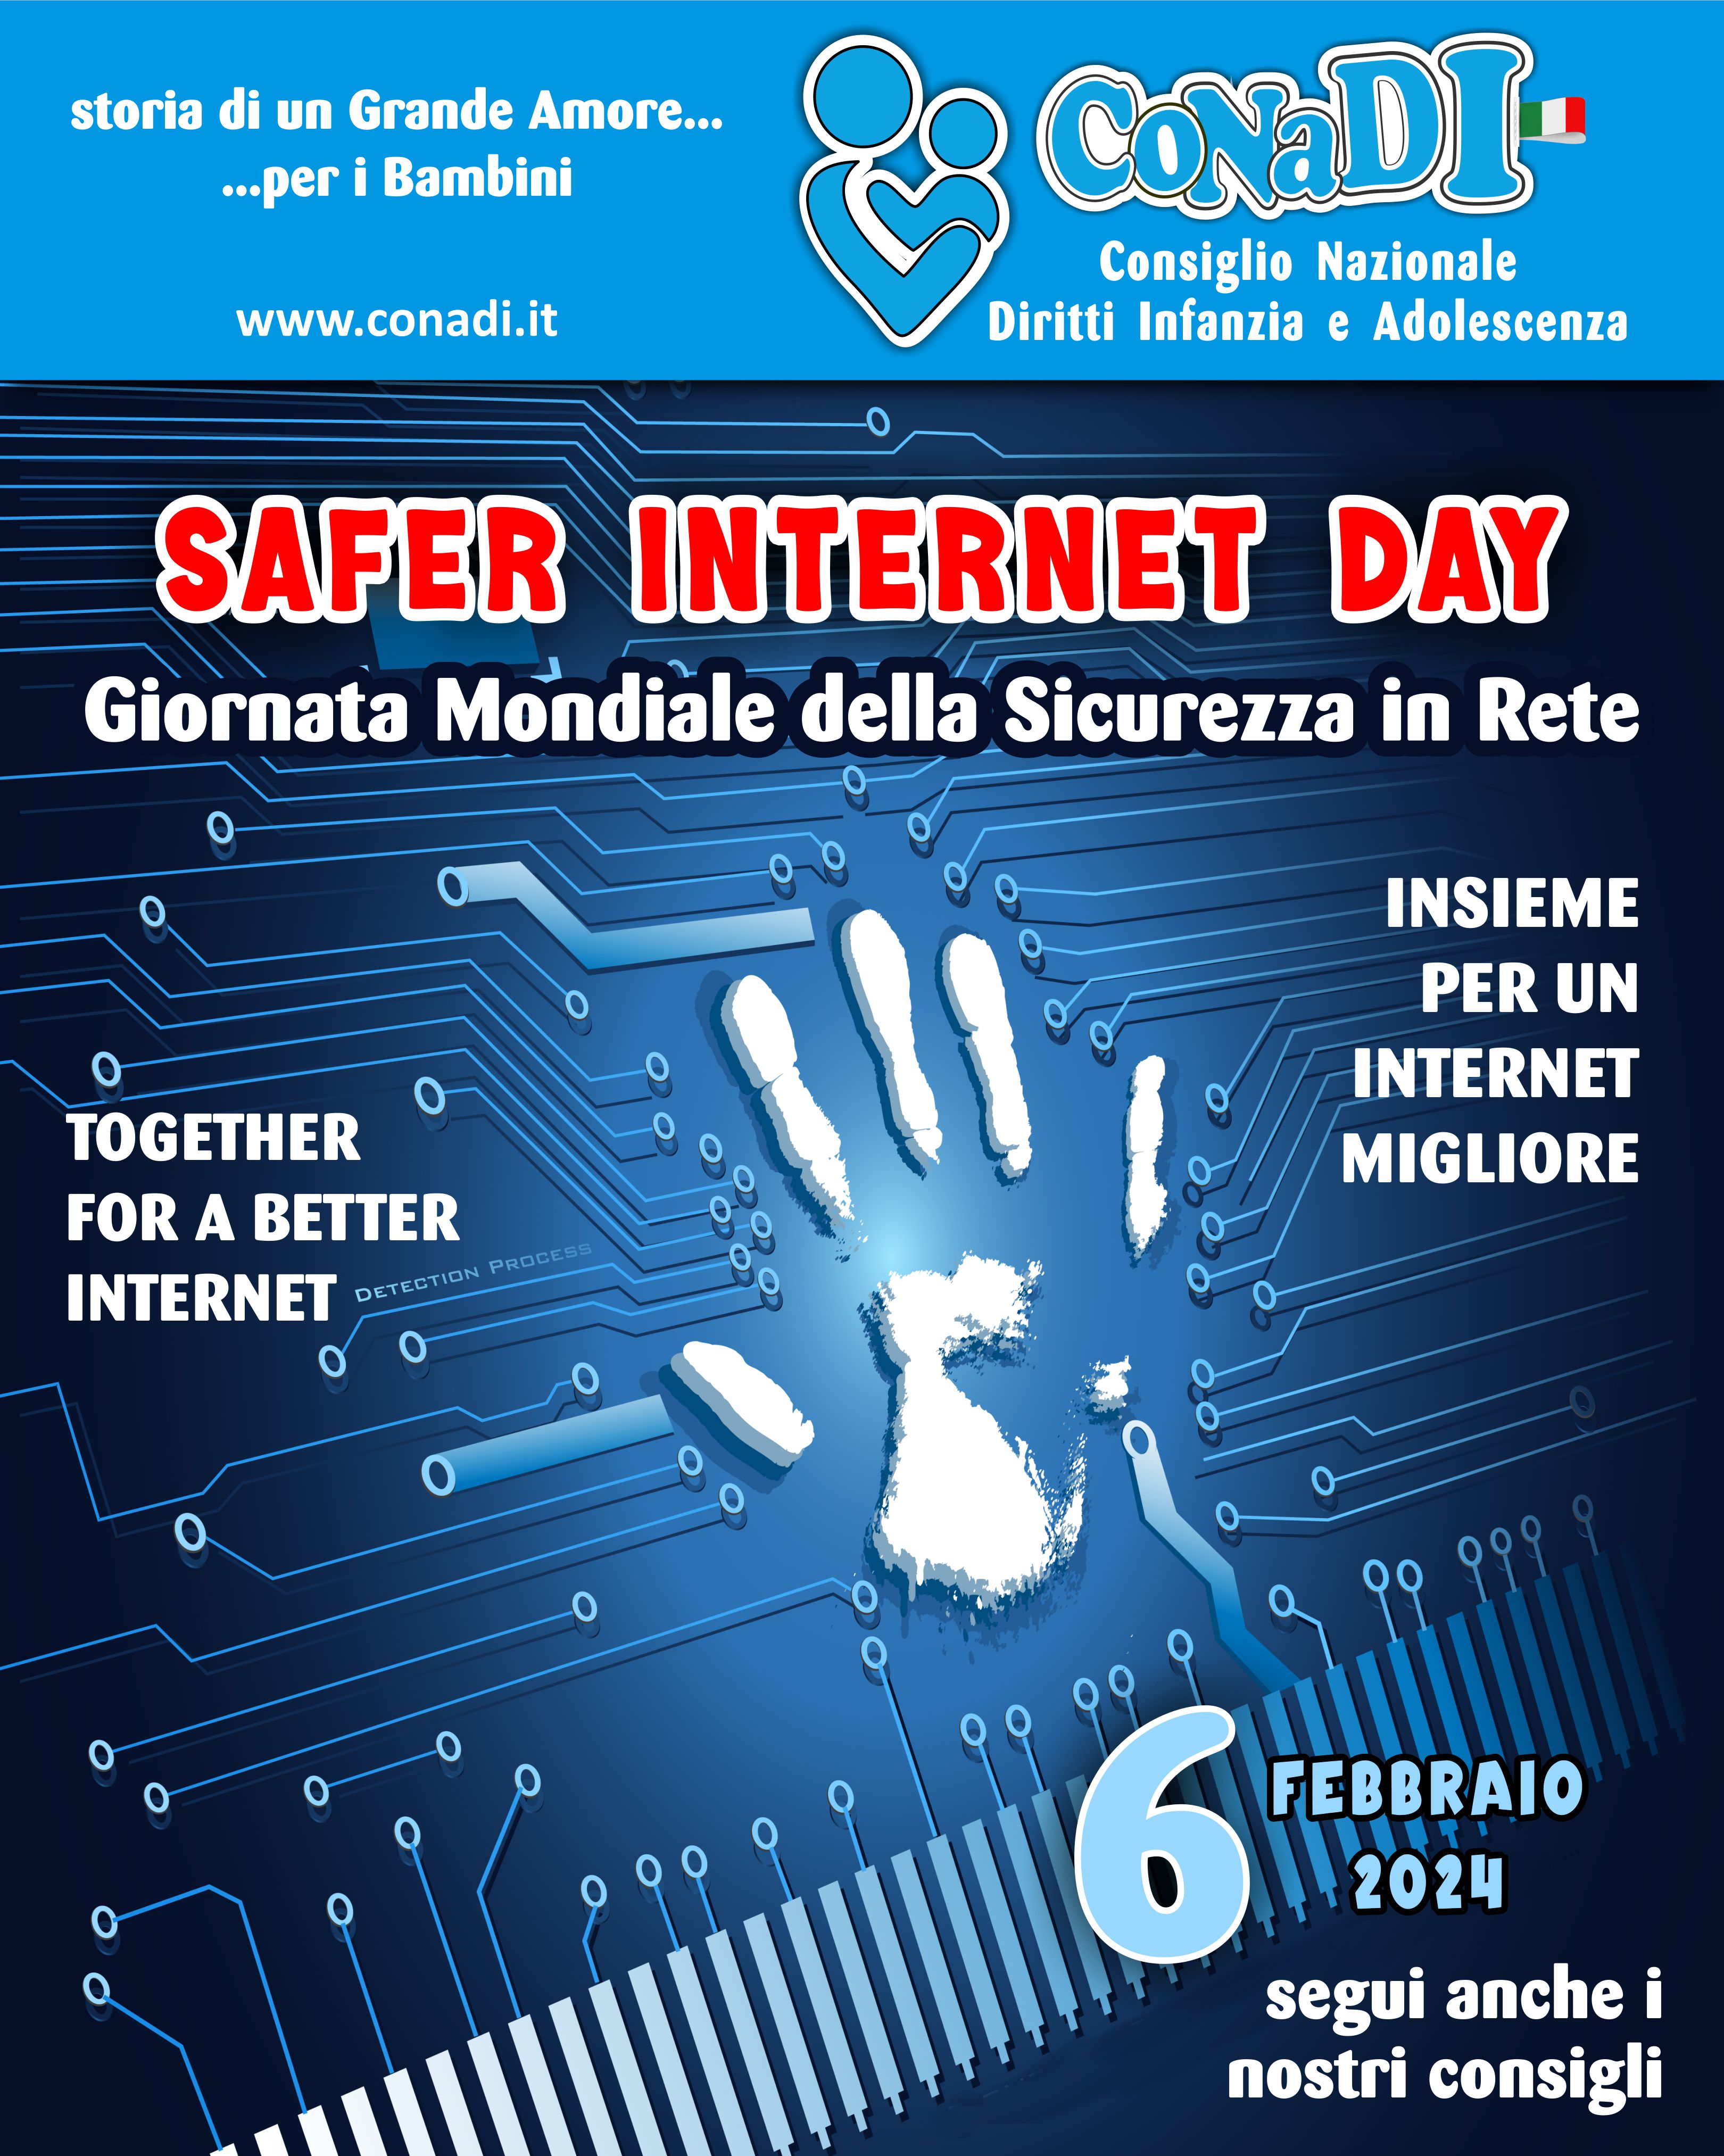 SDI - Safer Internet Day